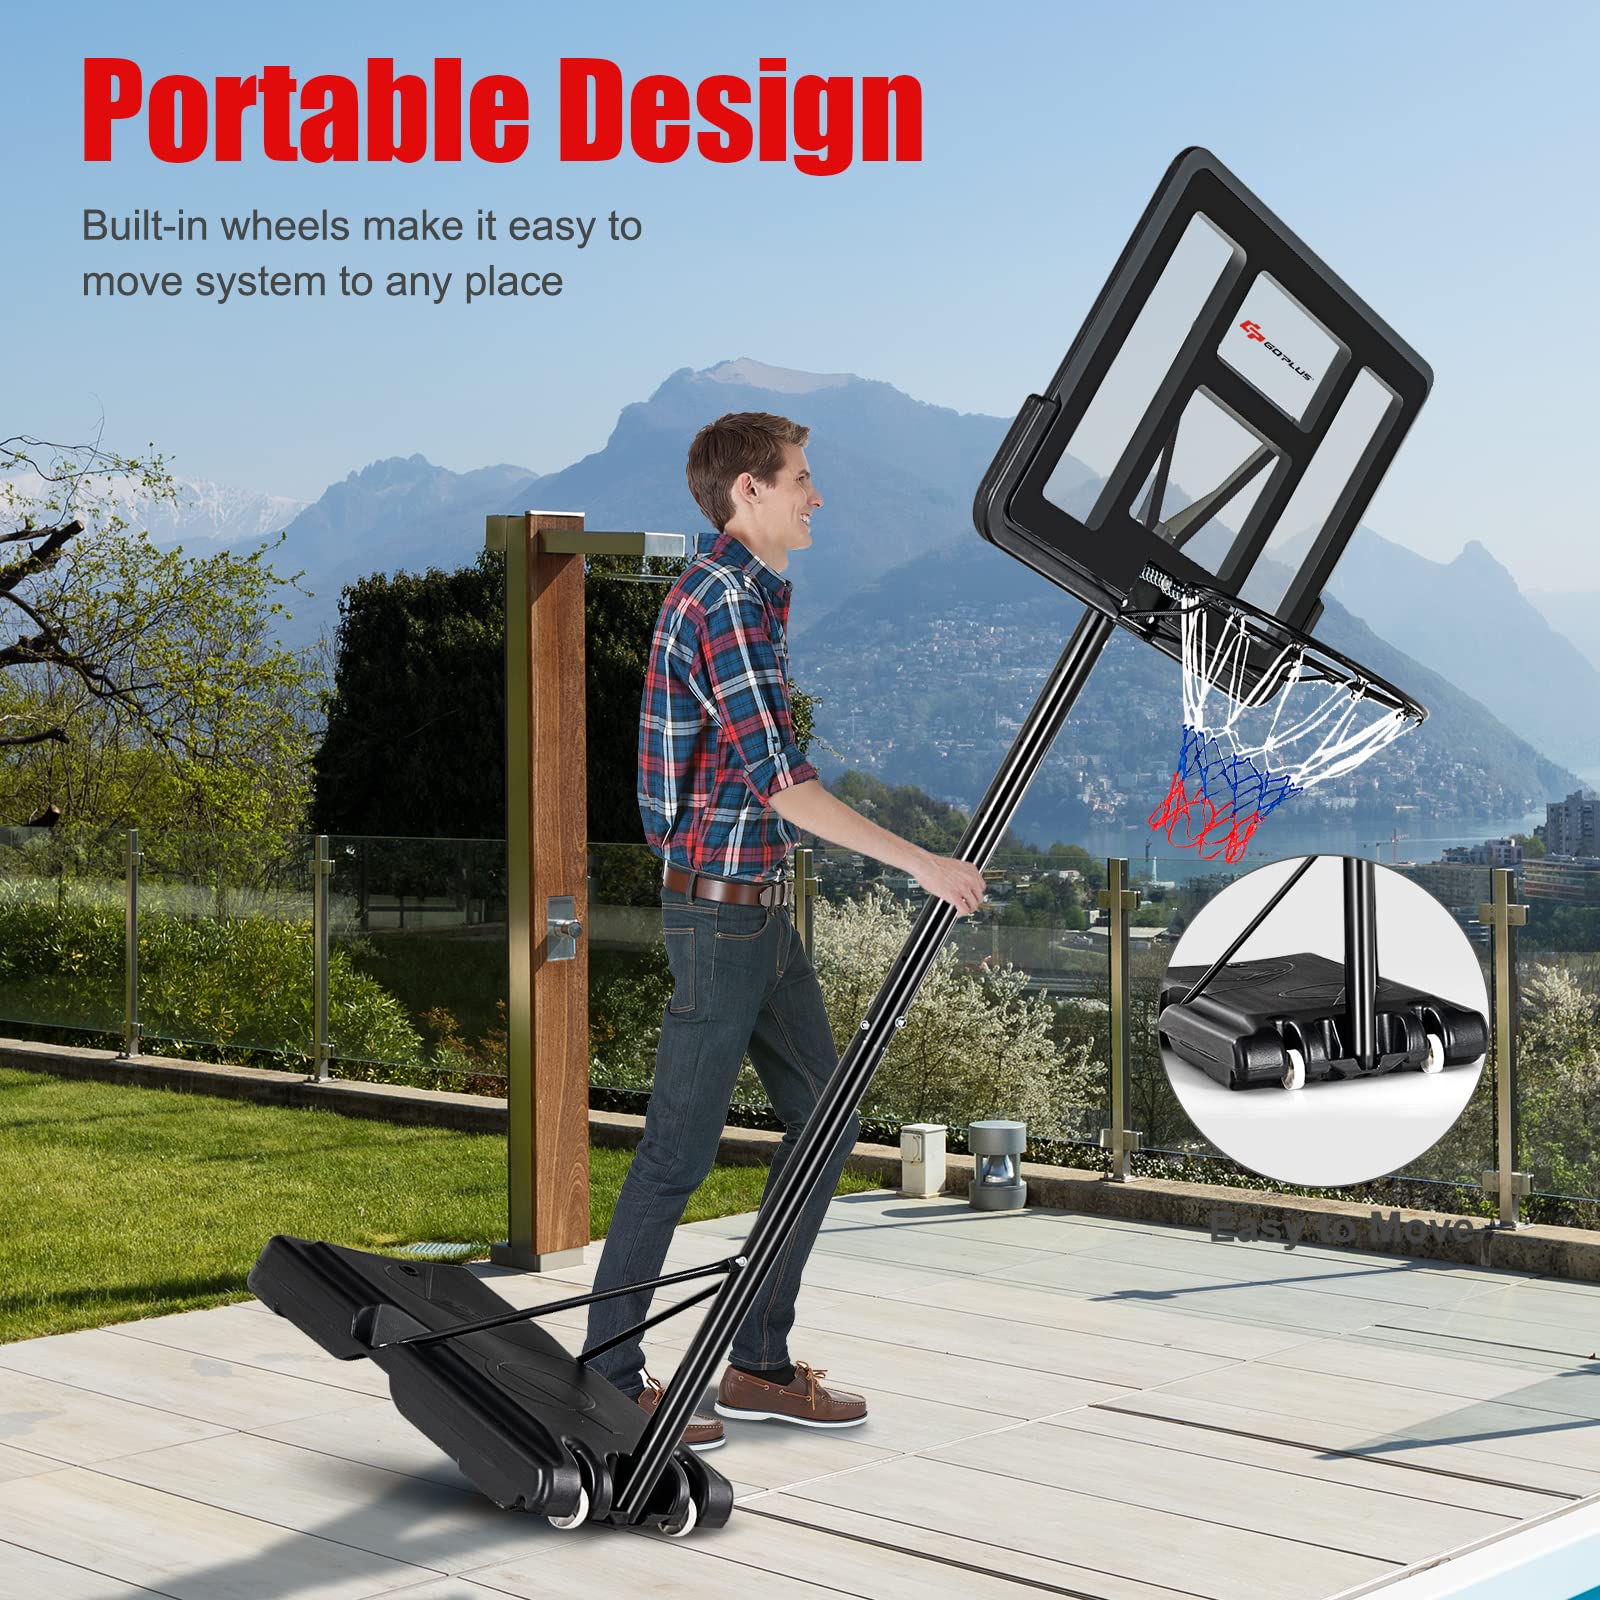 Goplus Portable Basketball Hoop Outdoor, 4.5FT-10FT Height Adjustable Basketball Goal System